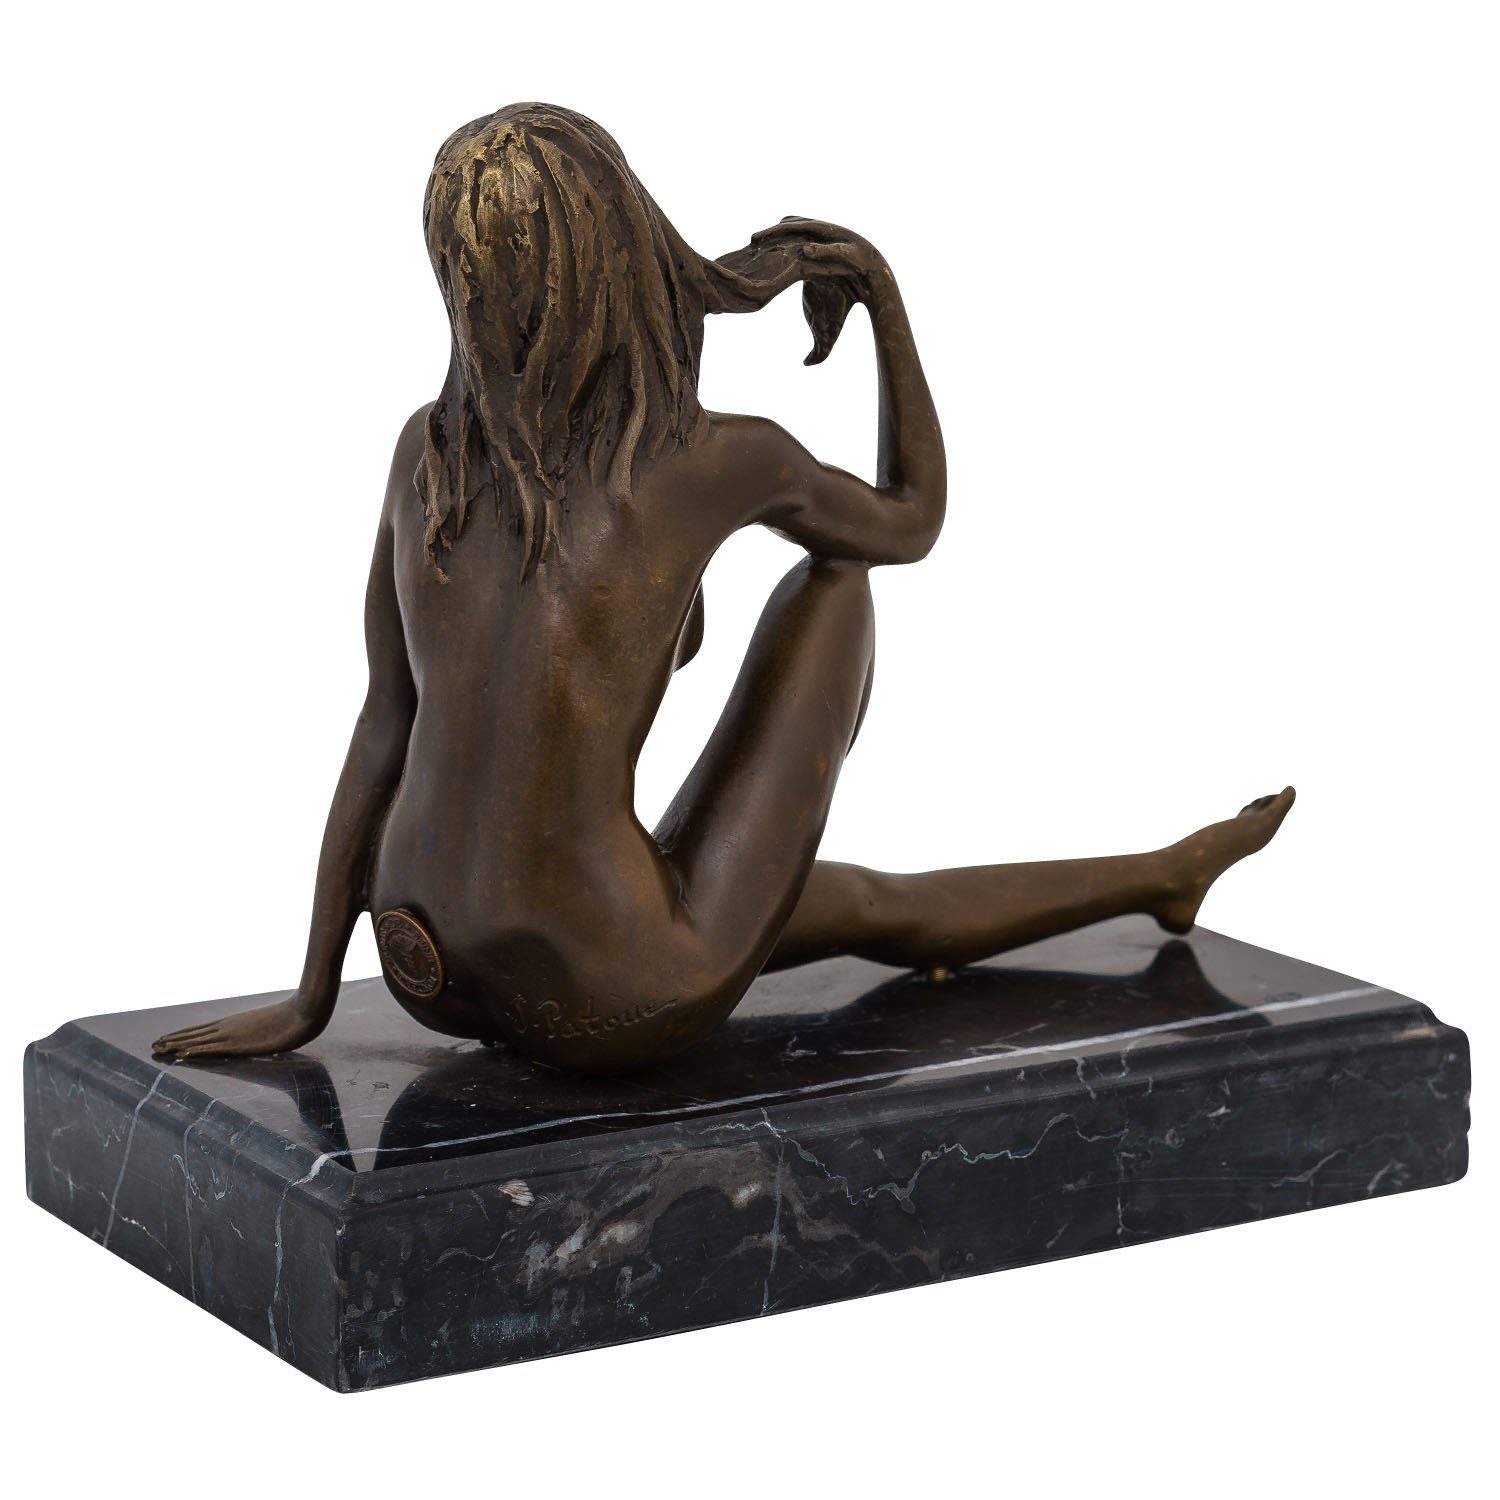 sculpture Bronzefigur Erotik Akt Frau Antik-Stil Skulptur Figur Bronze Aubaho Bronzeskulptur